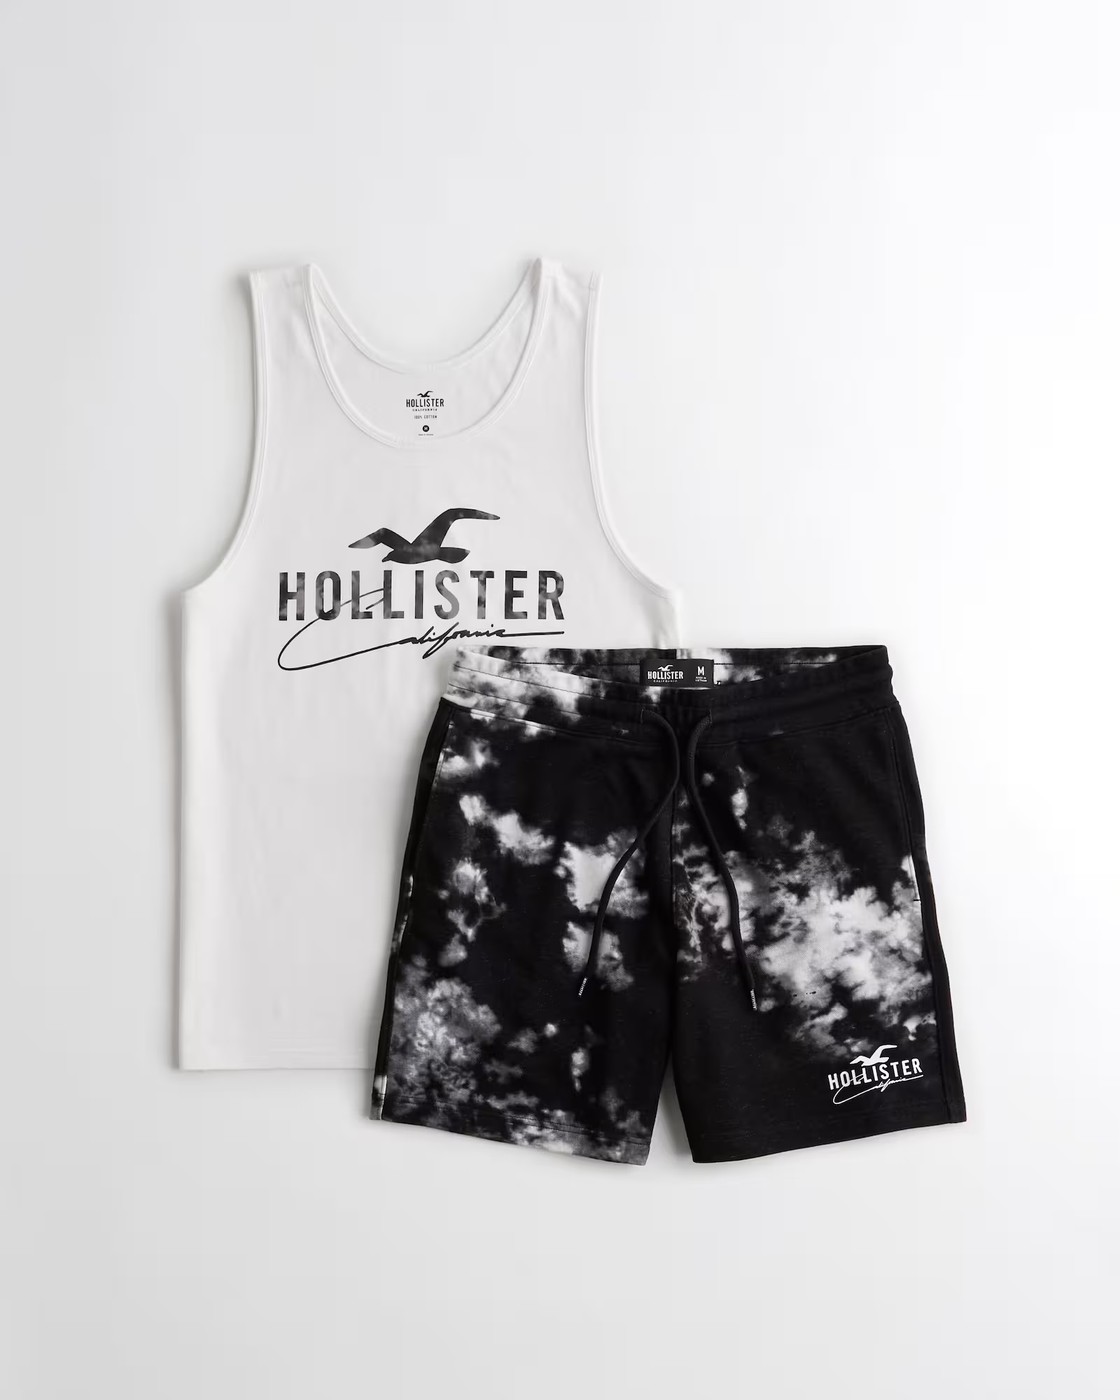 Комплект Hollister (майка, шорты) (2 шт.), L, L